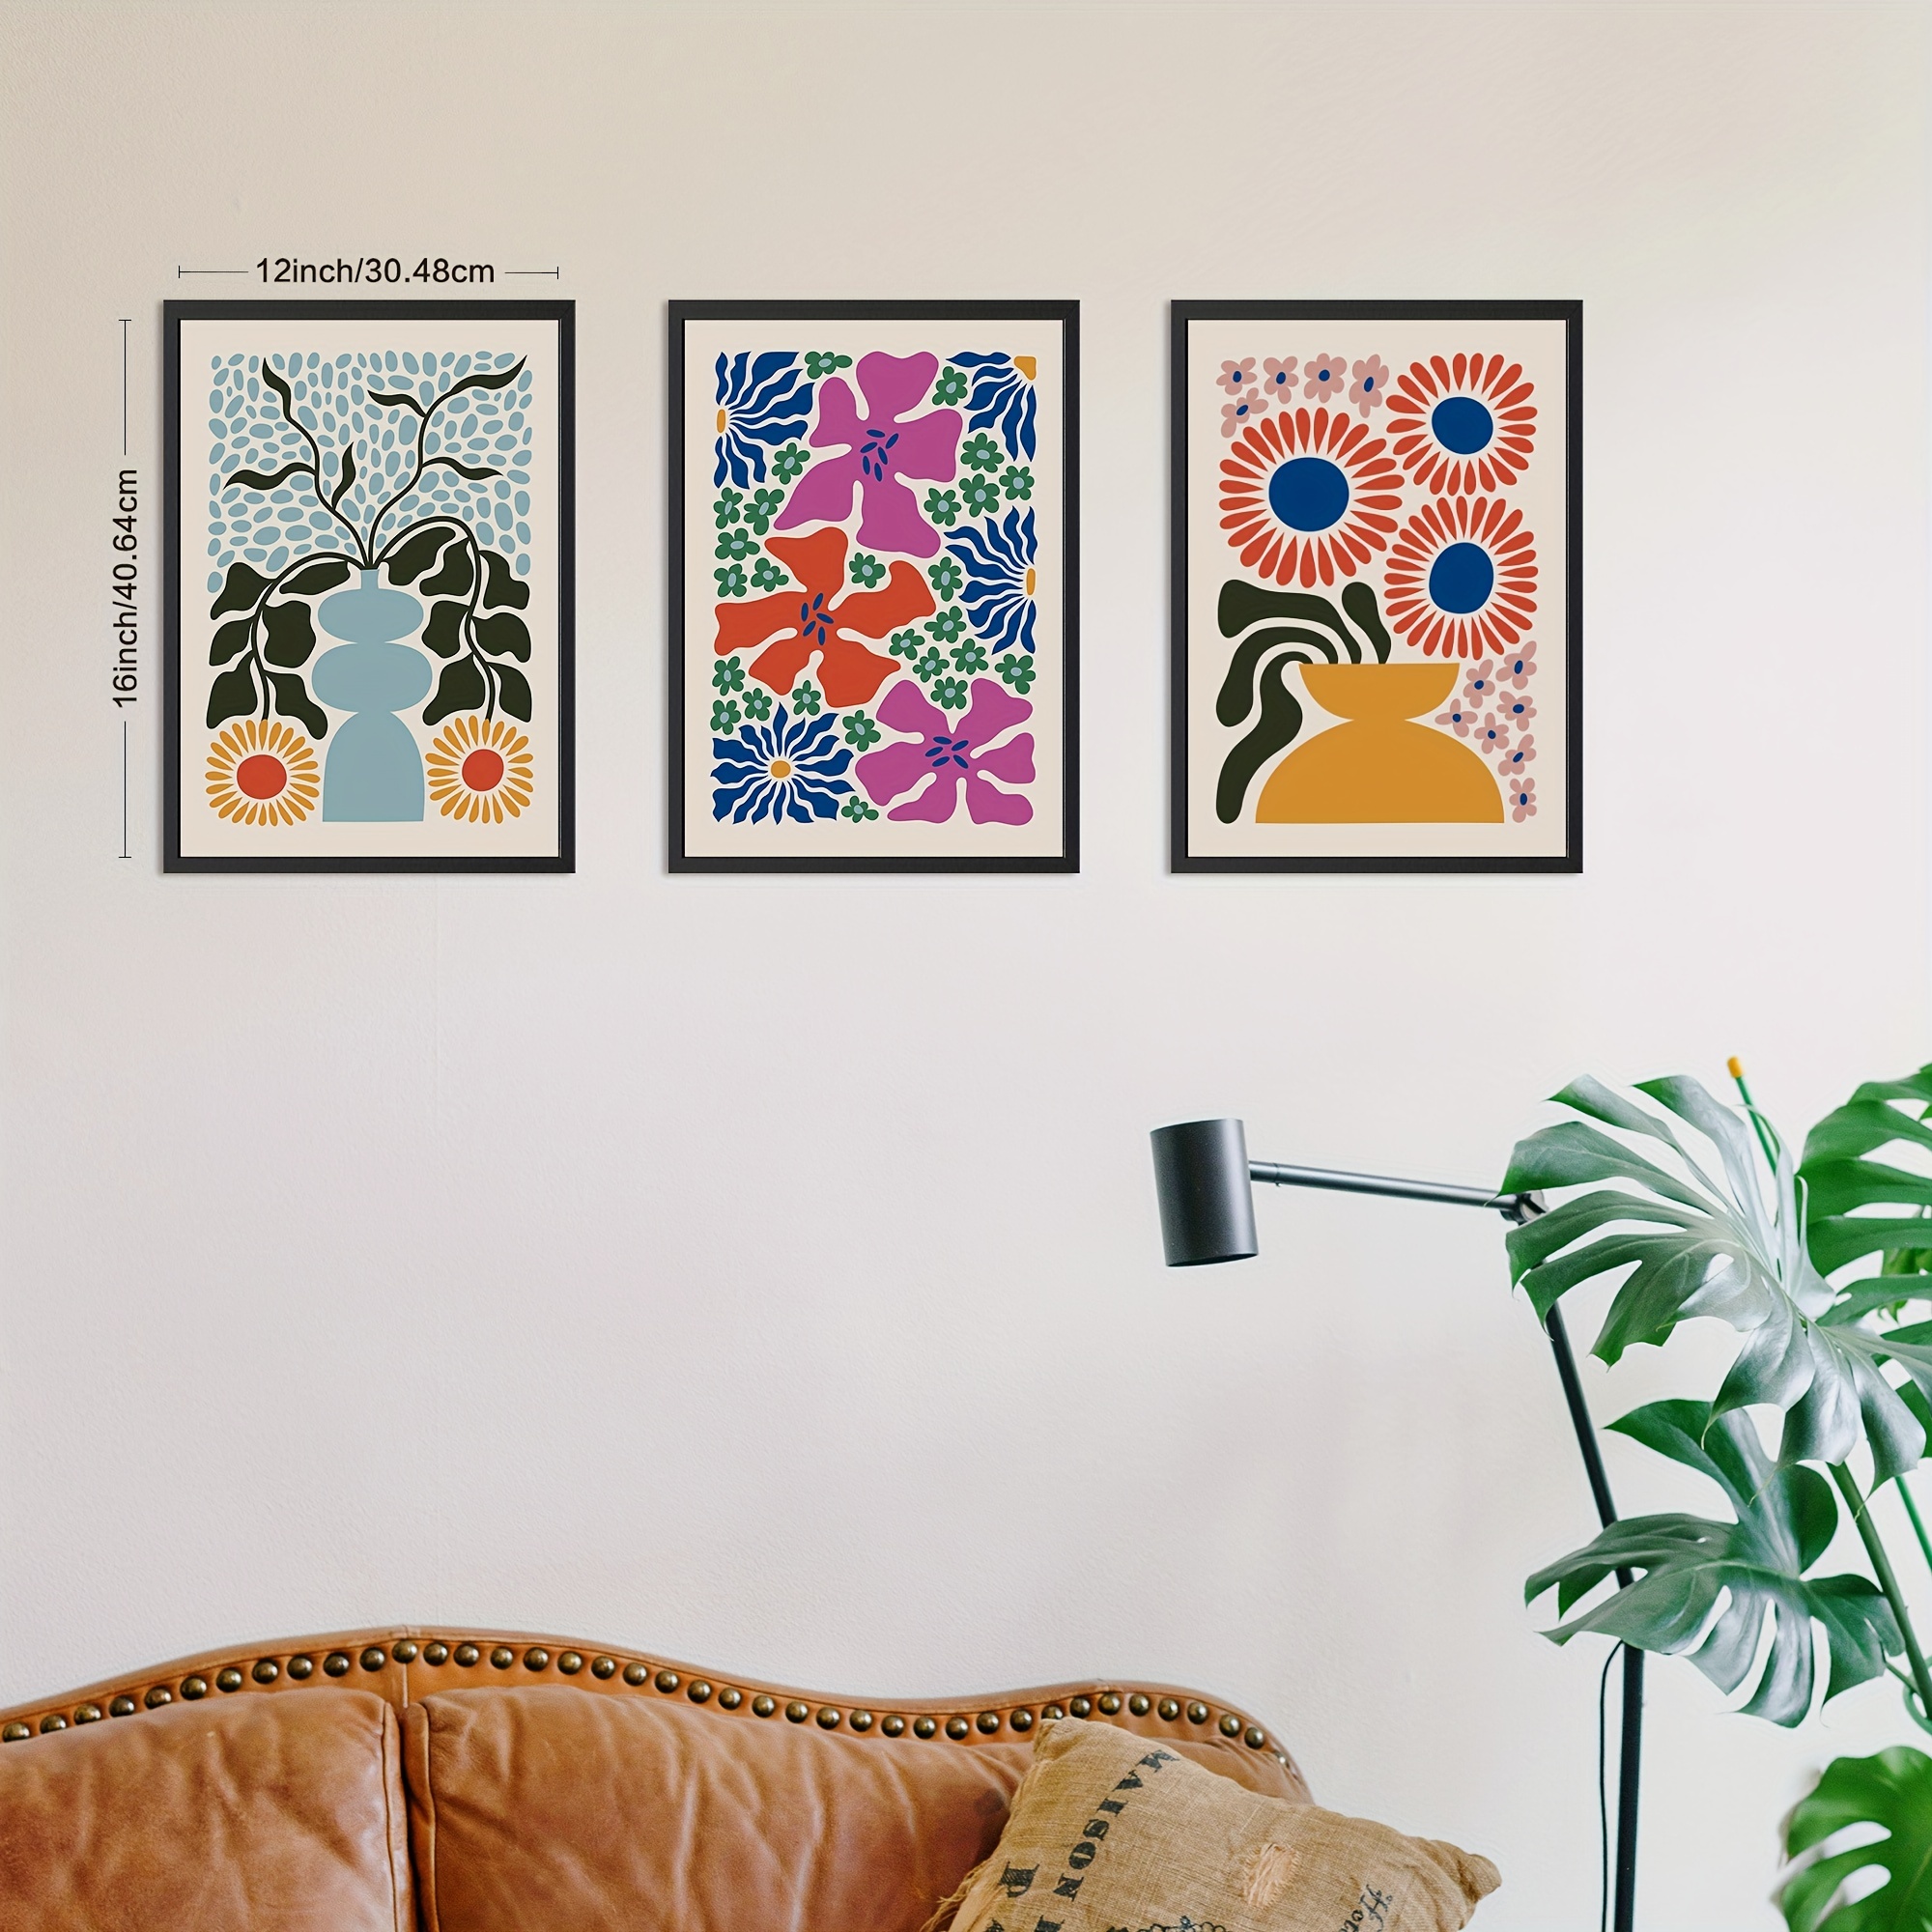 Mandala Art: Canvas Prints & Wall Art